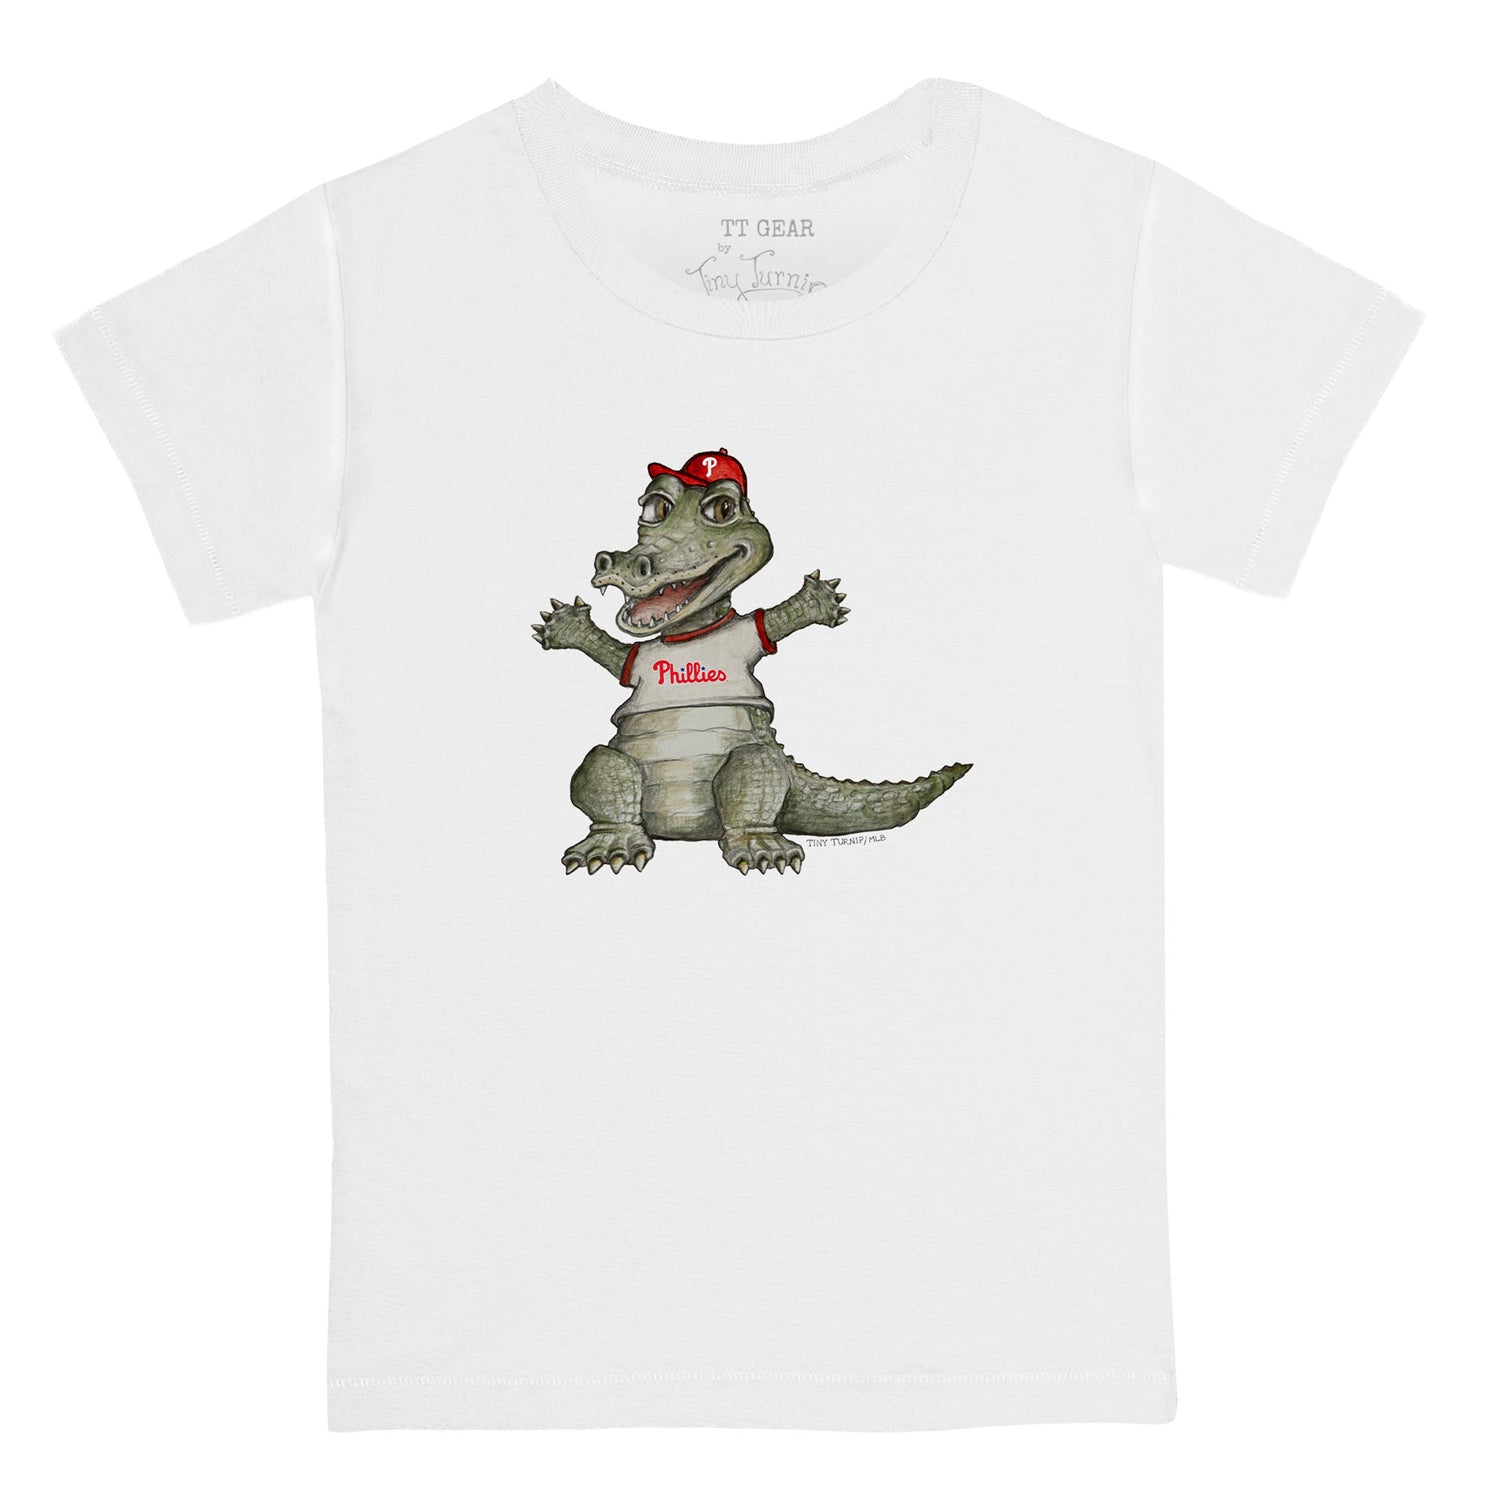 Philadelphia Phillies Emotional Support Alligator Tee Shirt